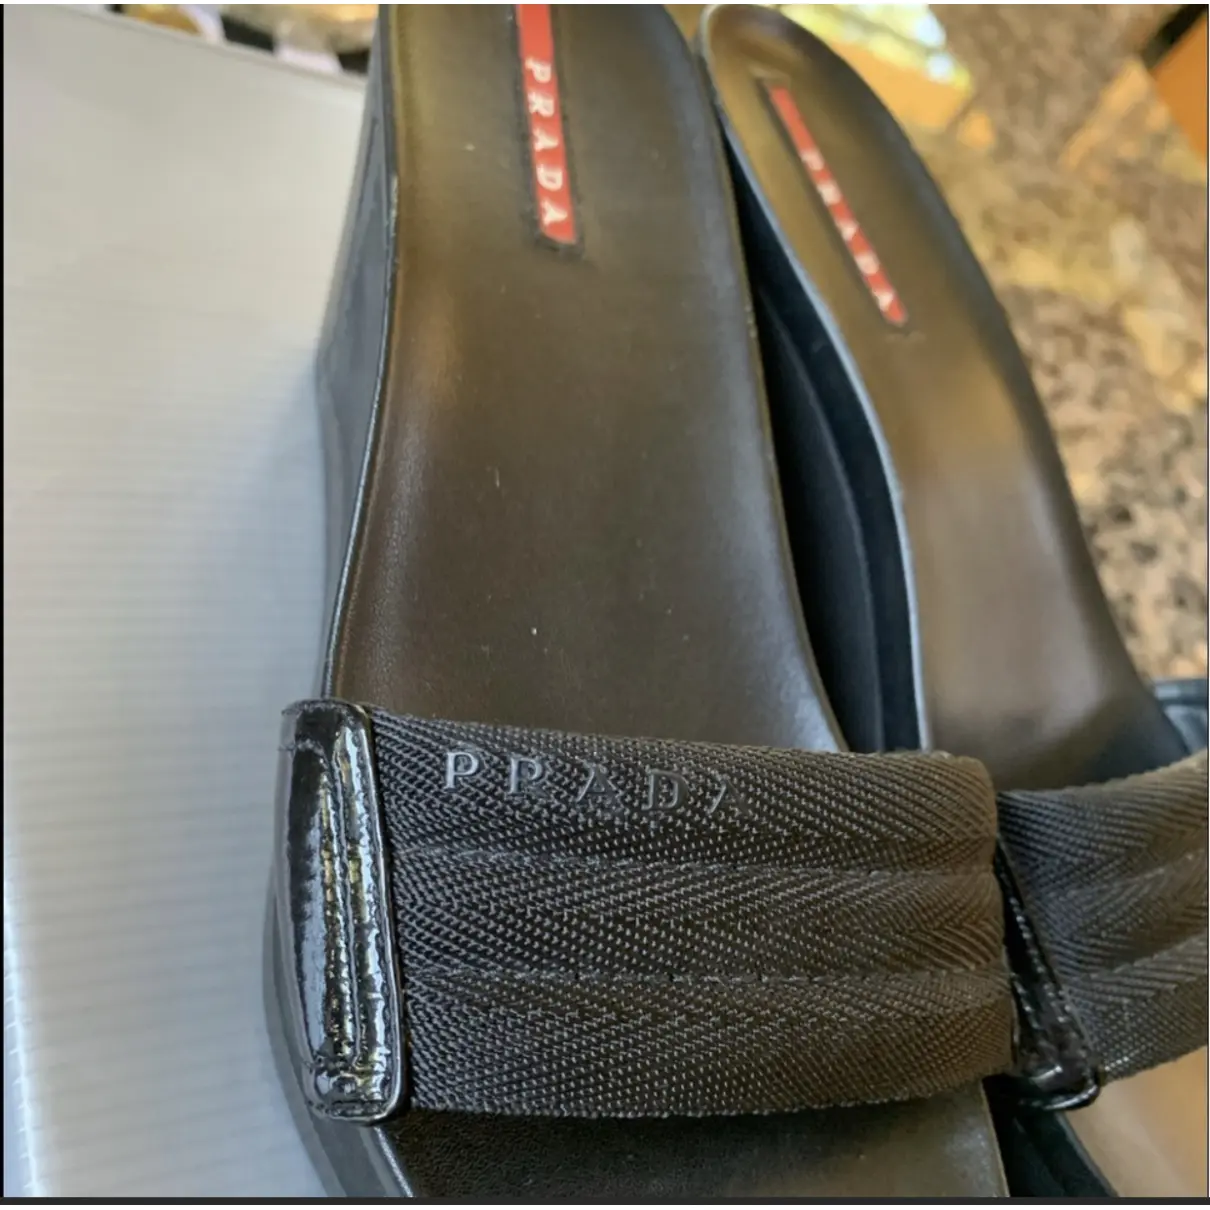 Patent leather sandal Prada